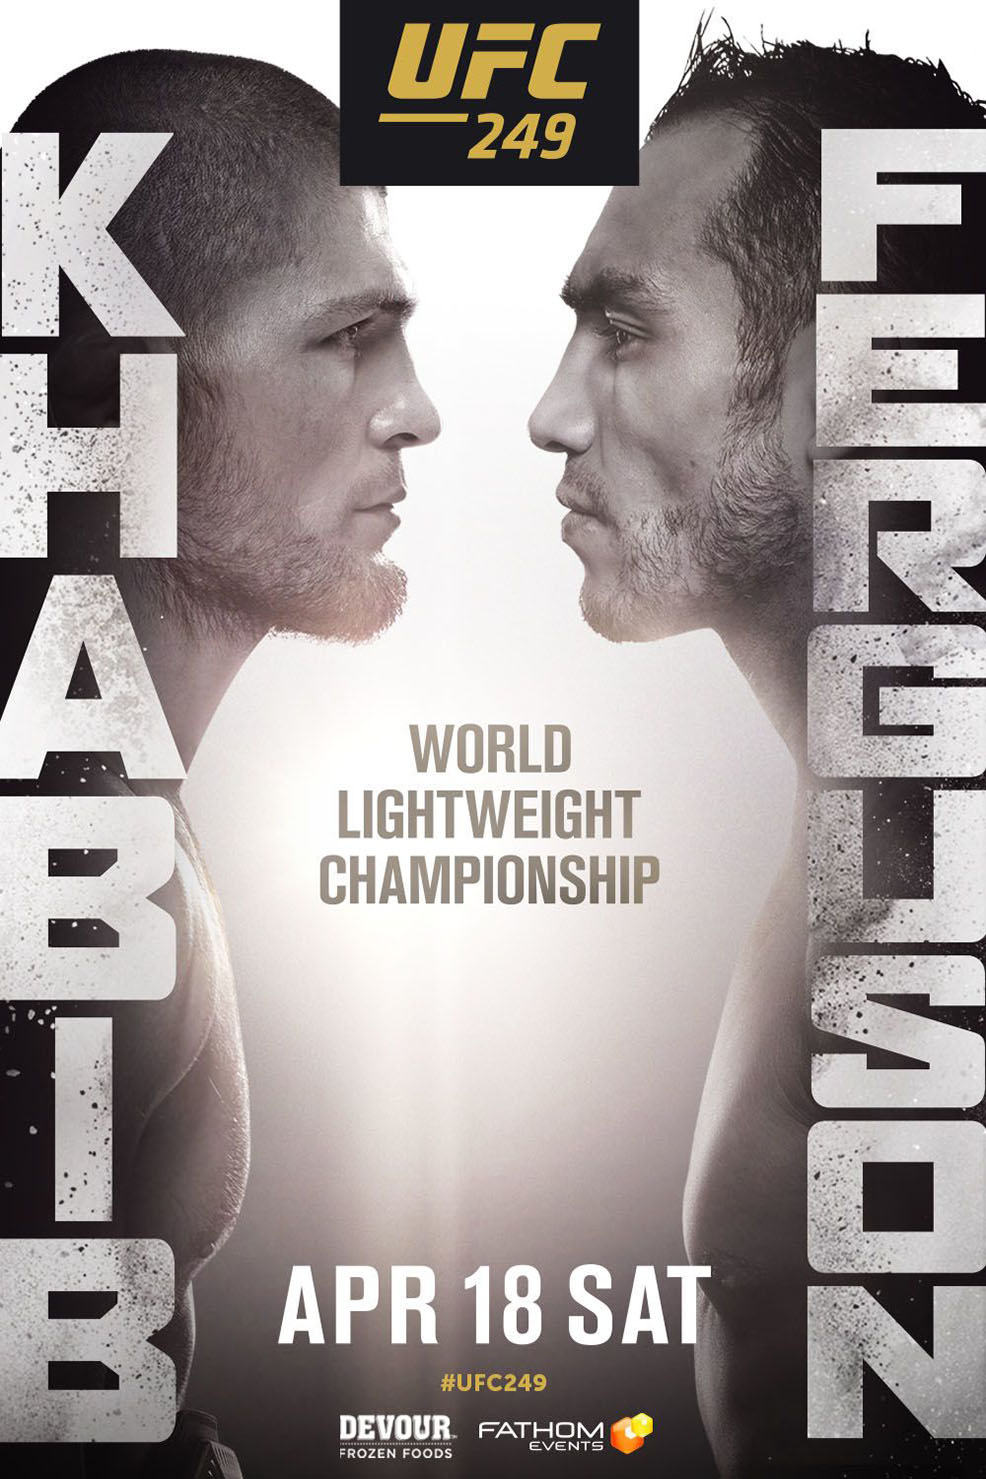 UFC 249 Khabib Nurmagomedov vs Tony Ferguson PHOTO Print POSTER Fight MMA 2020